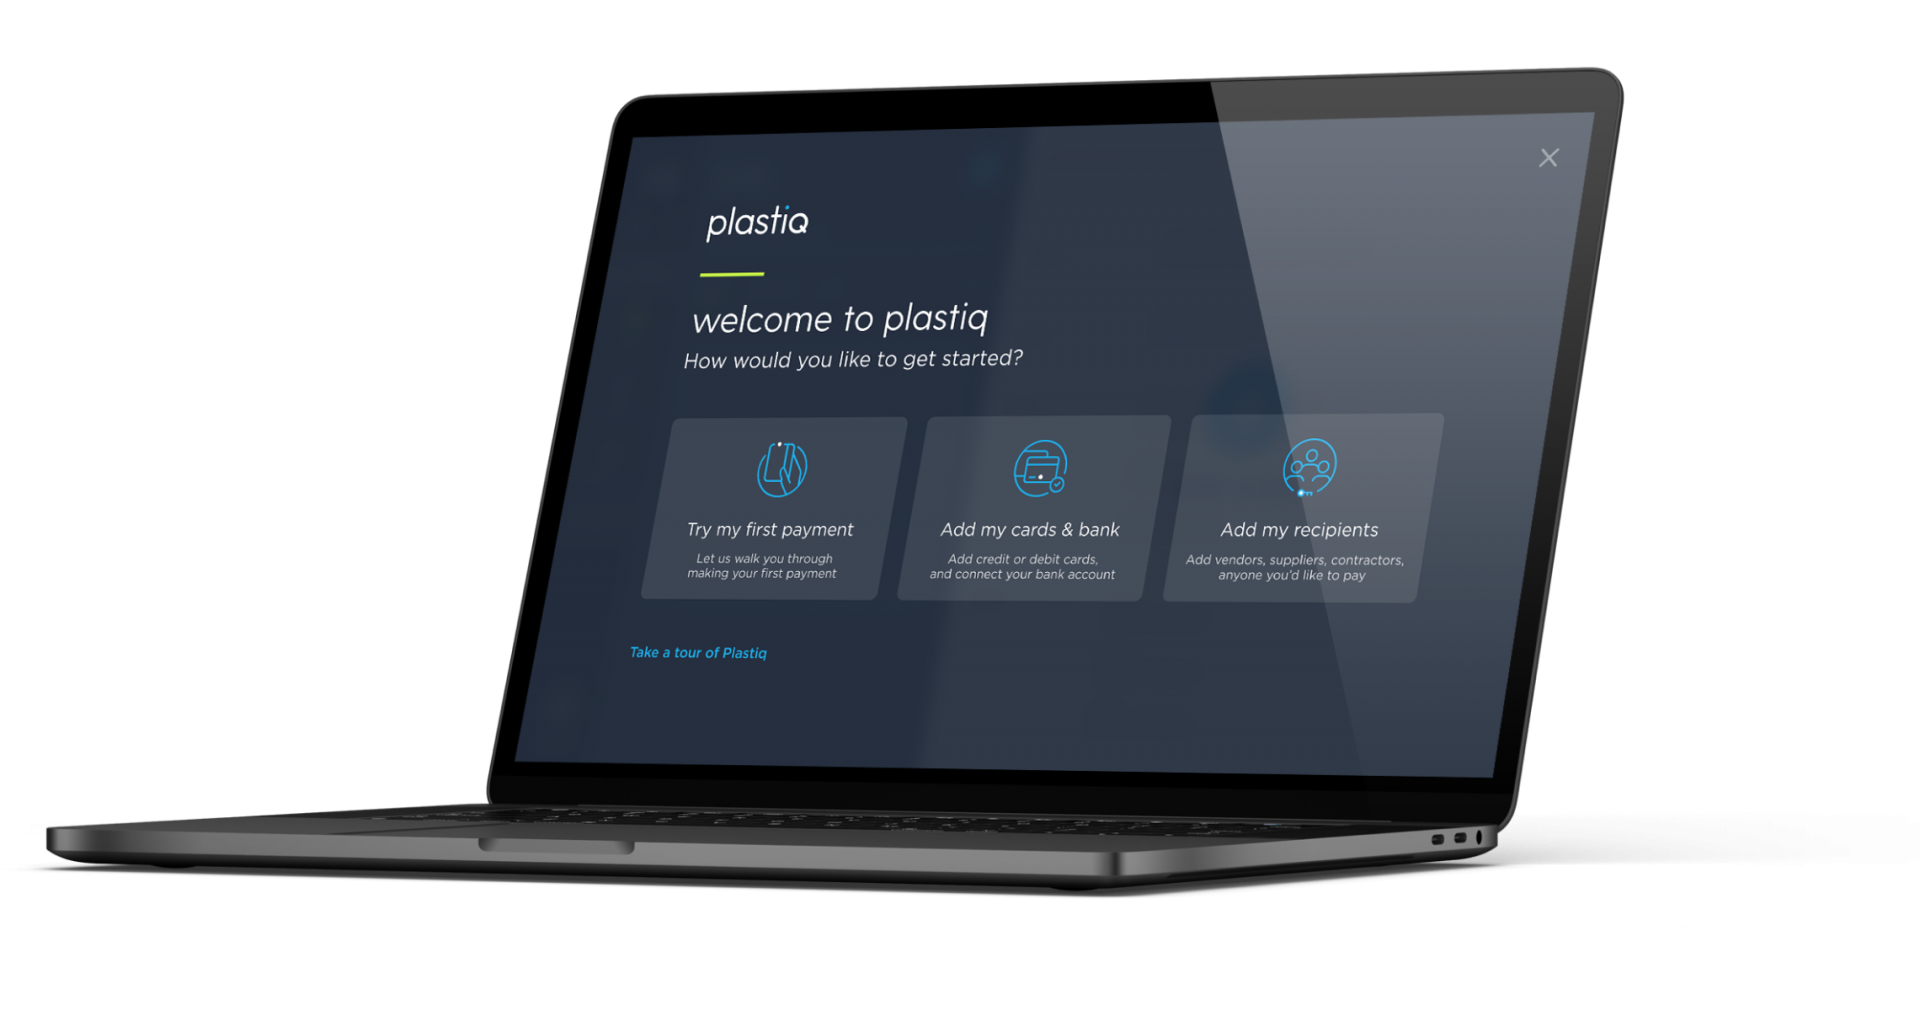 macbook- welcome to plastiq